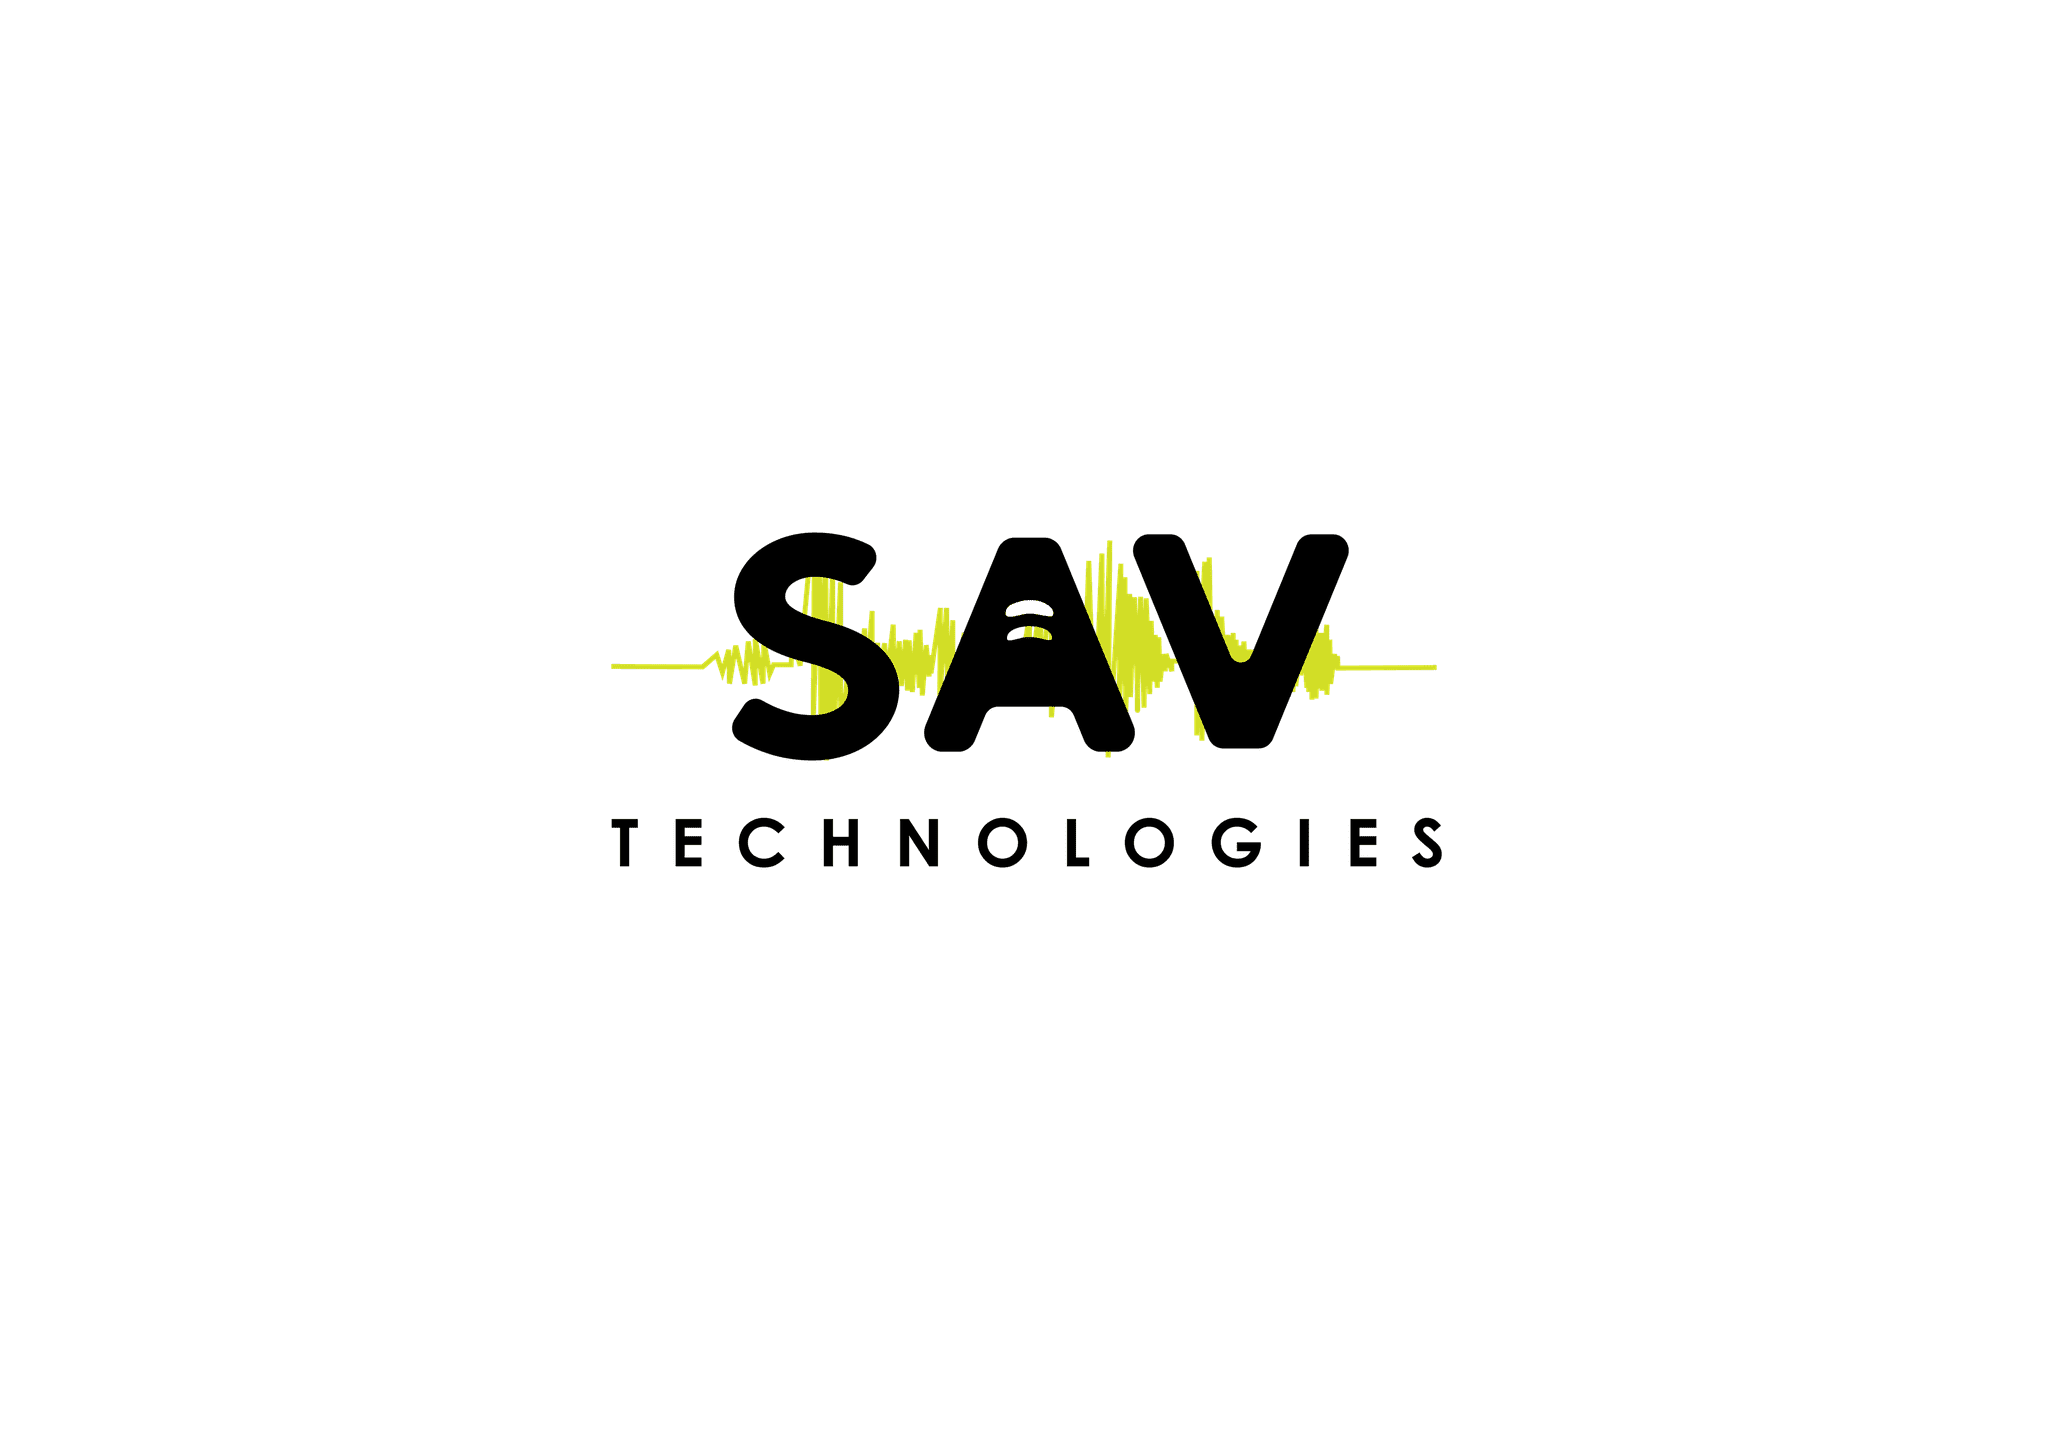 SAV Technologies